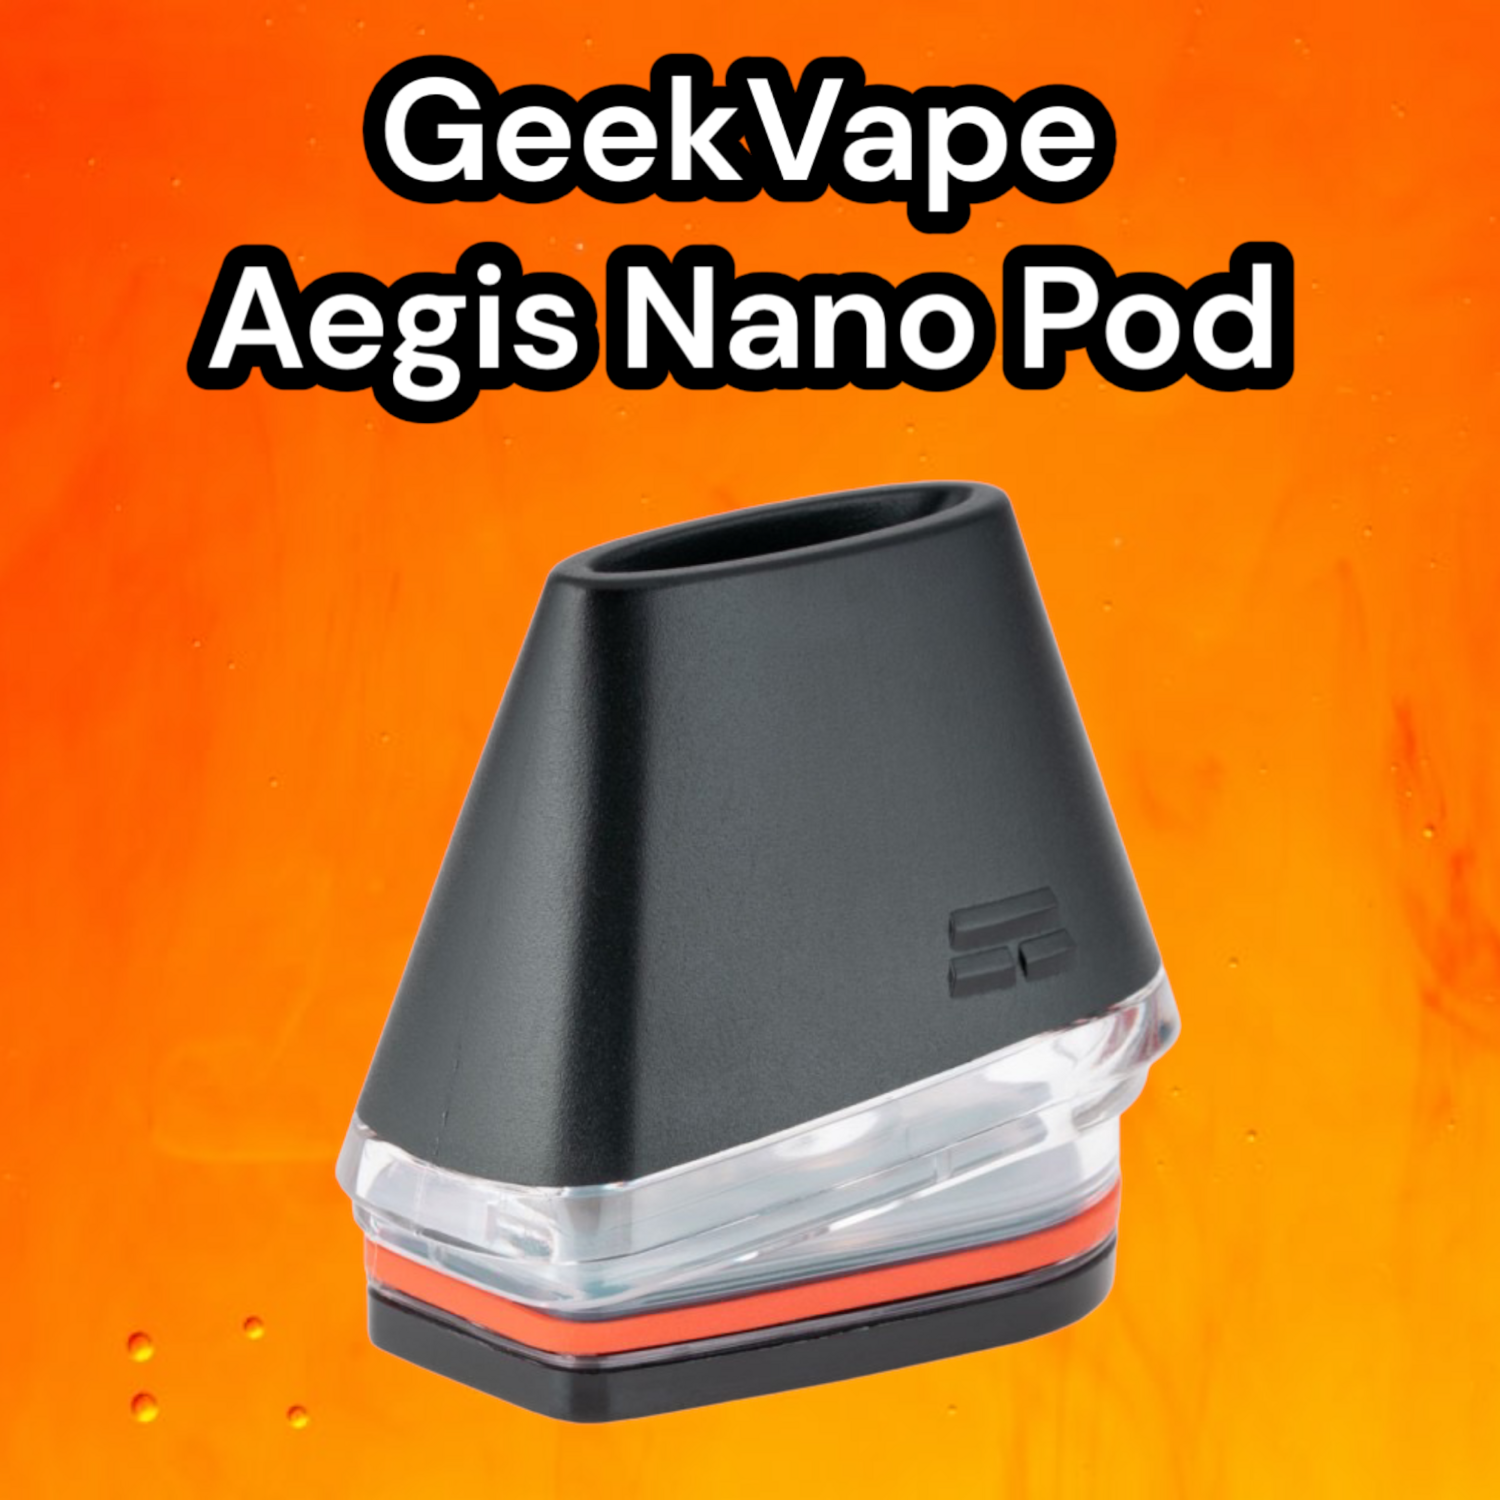 GeekVape Aegis Nano Pod